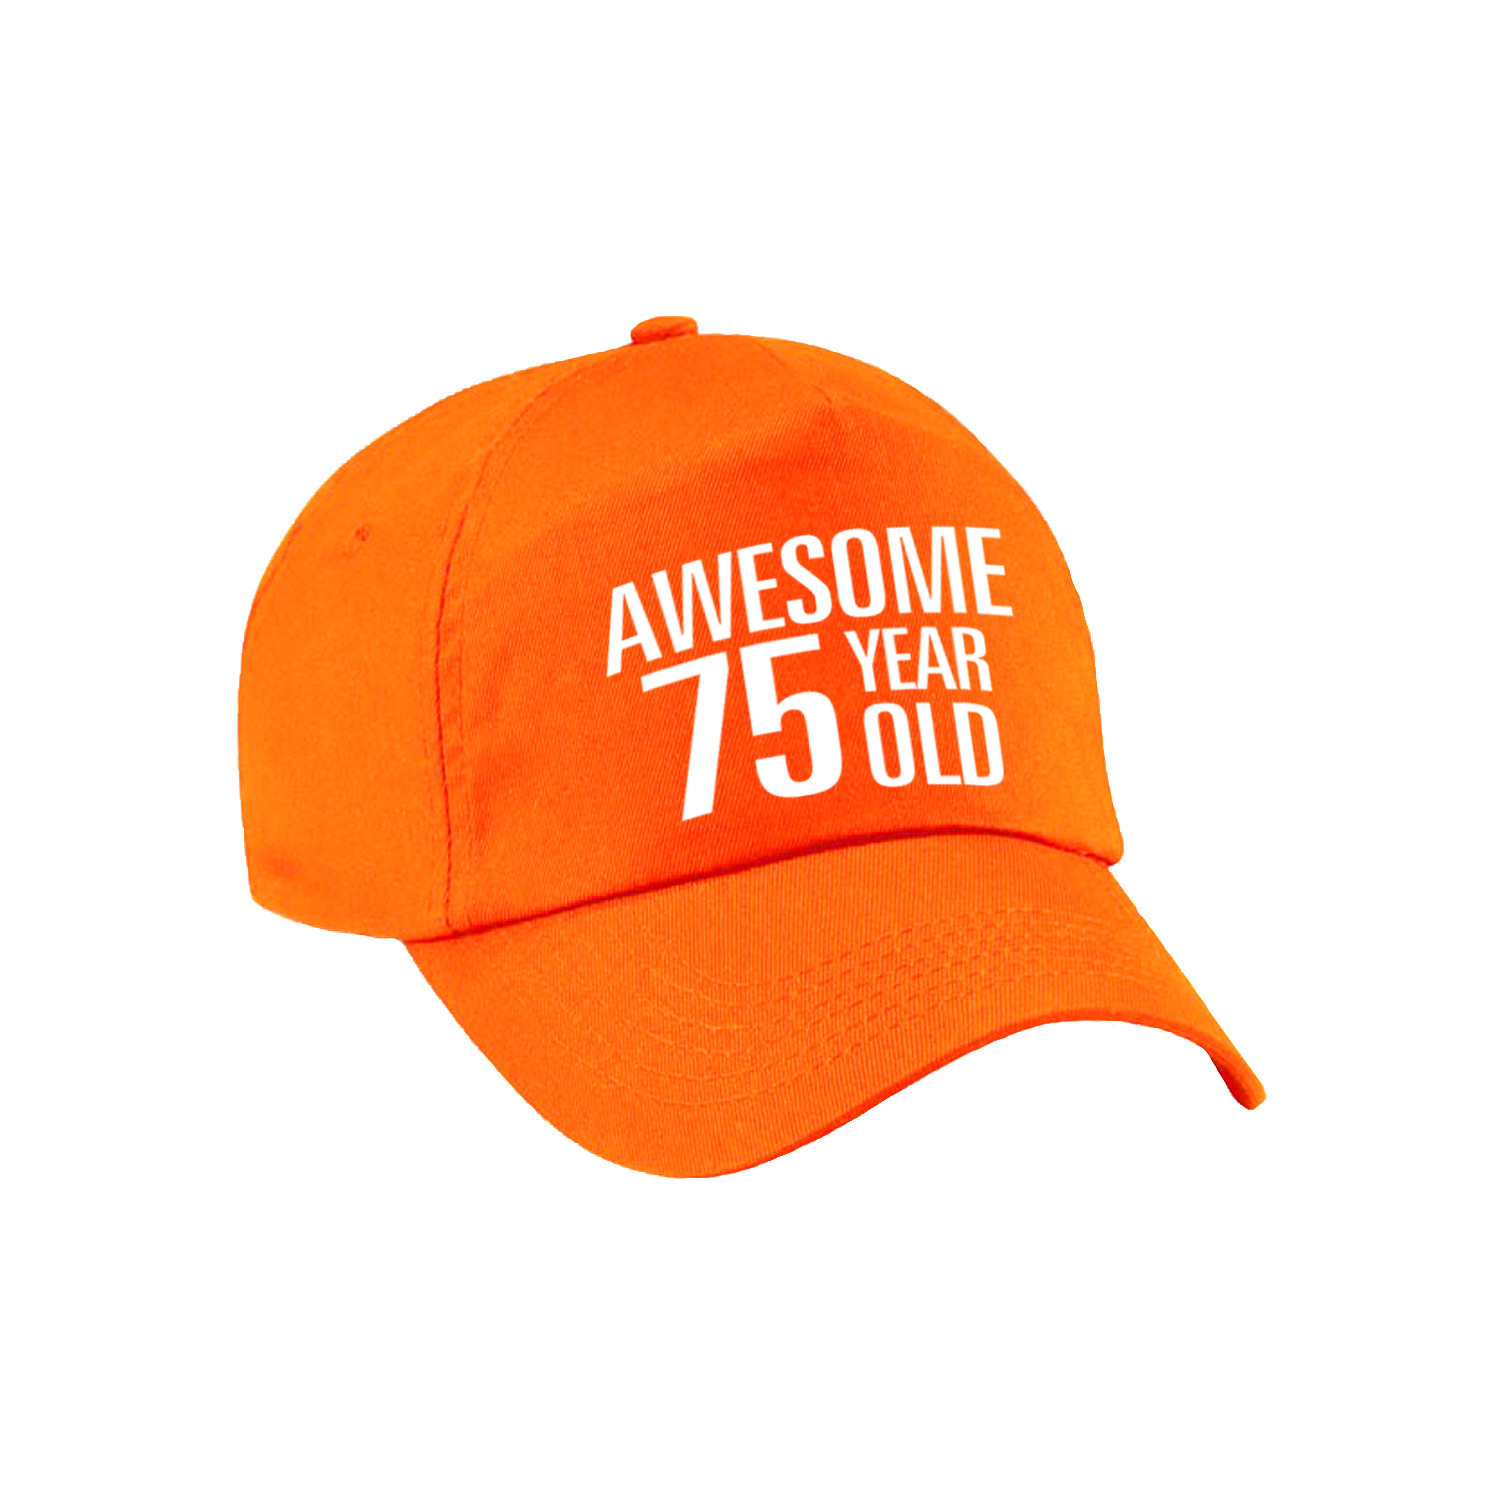 Awesome 75 year old verjaardag pet / cap oranje voor dames en heren